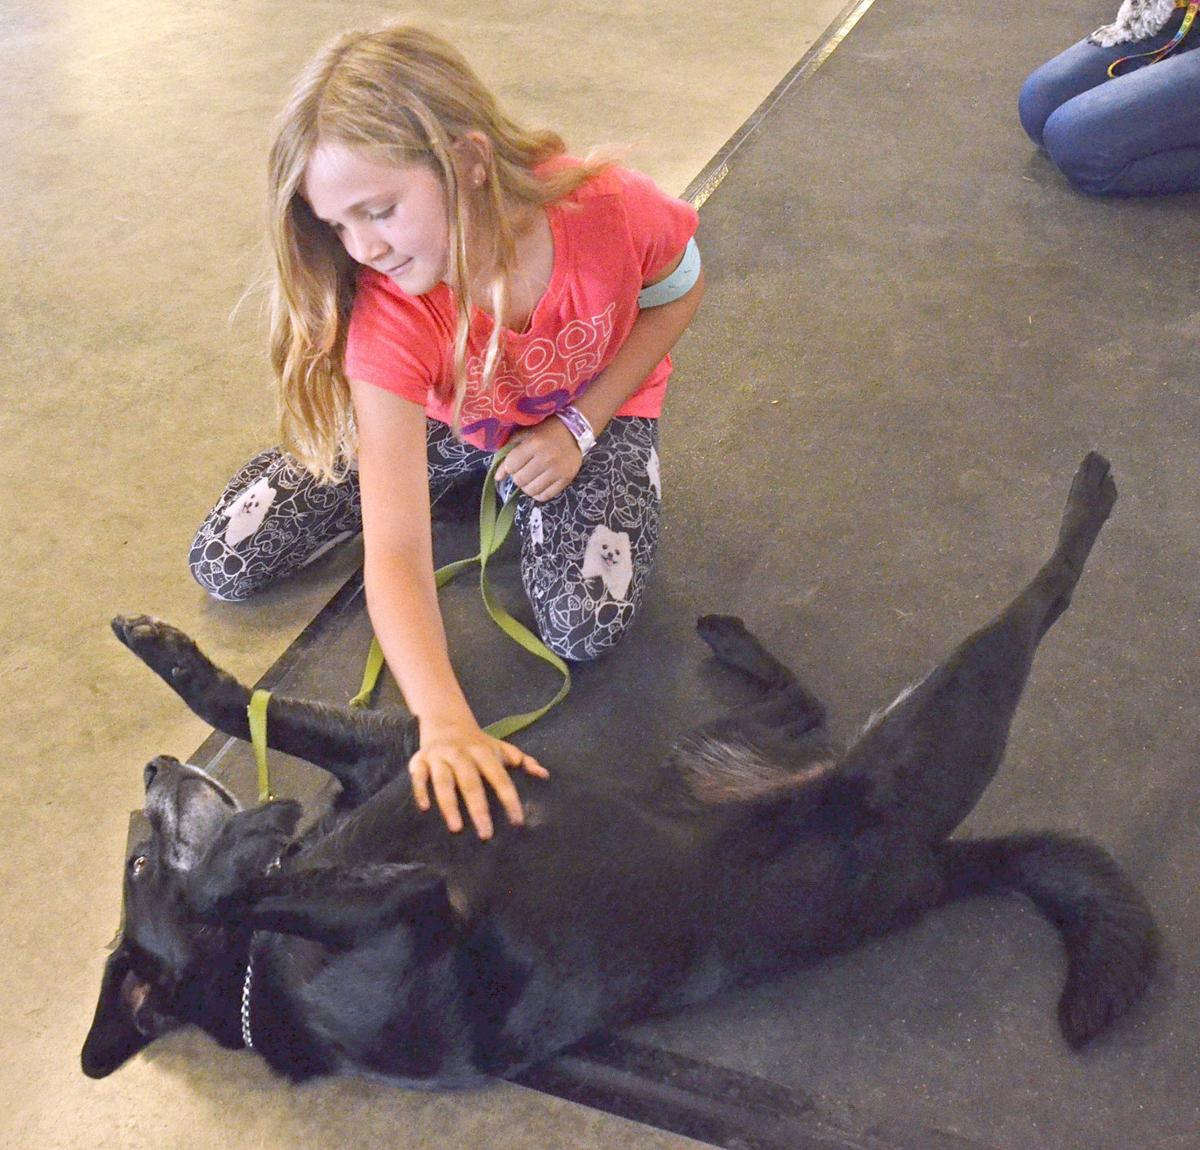 Kids put dog obedience skills to the test | News ...